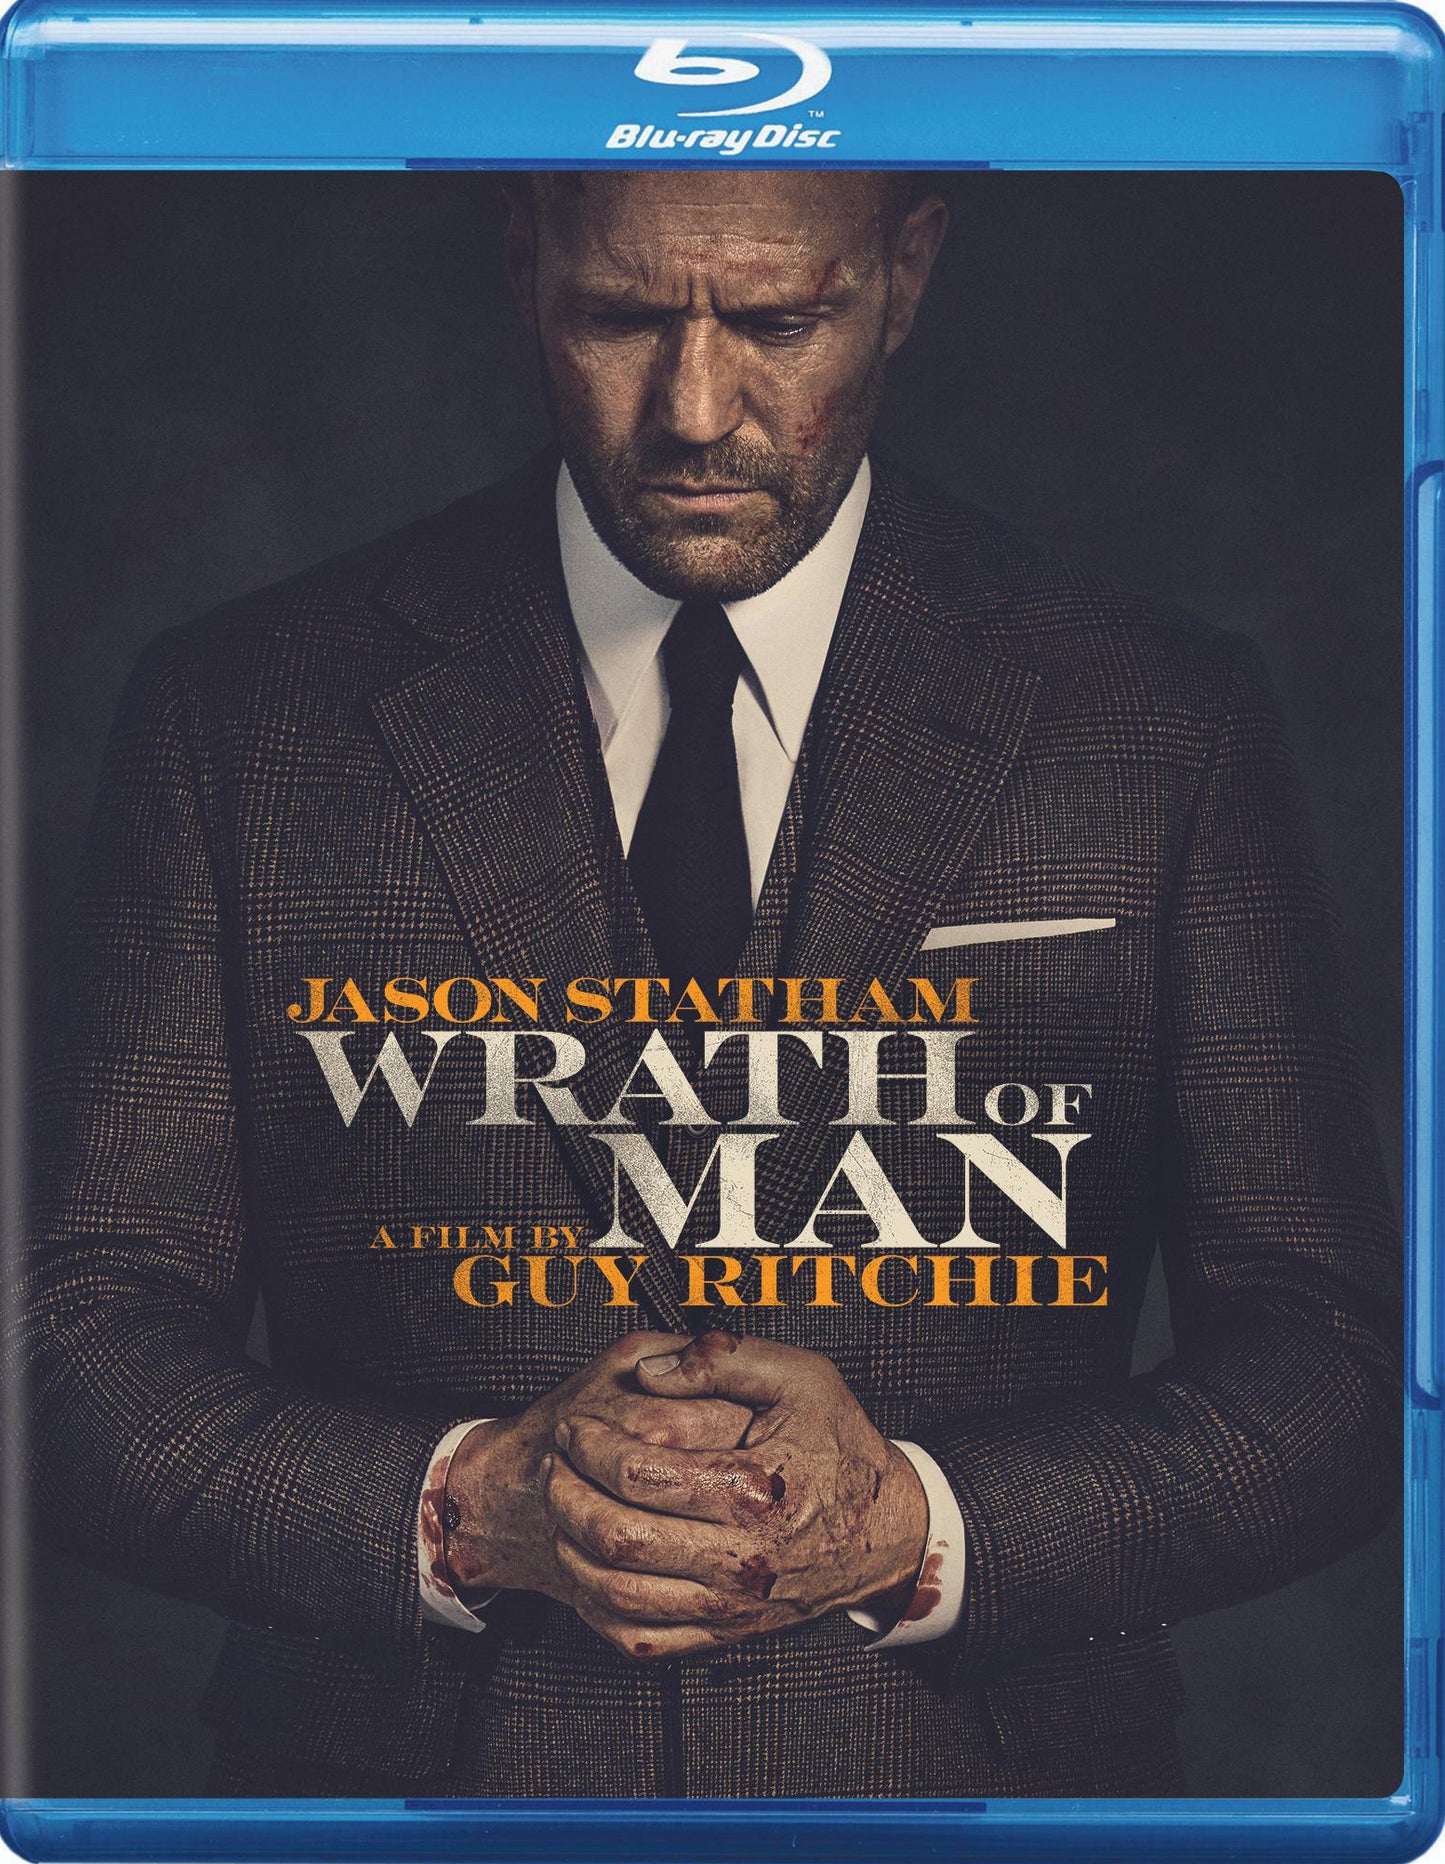 Wrath of Man [Blu-ray] cover art